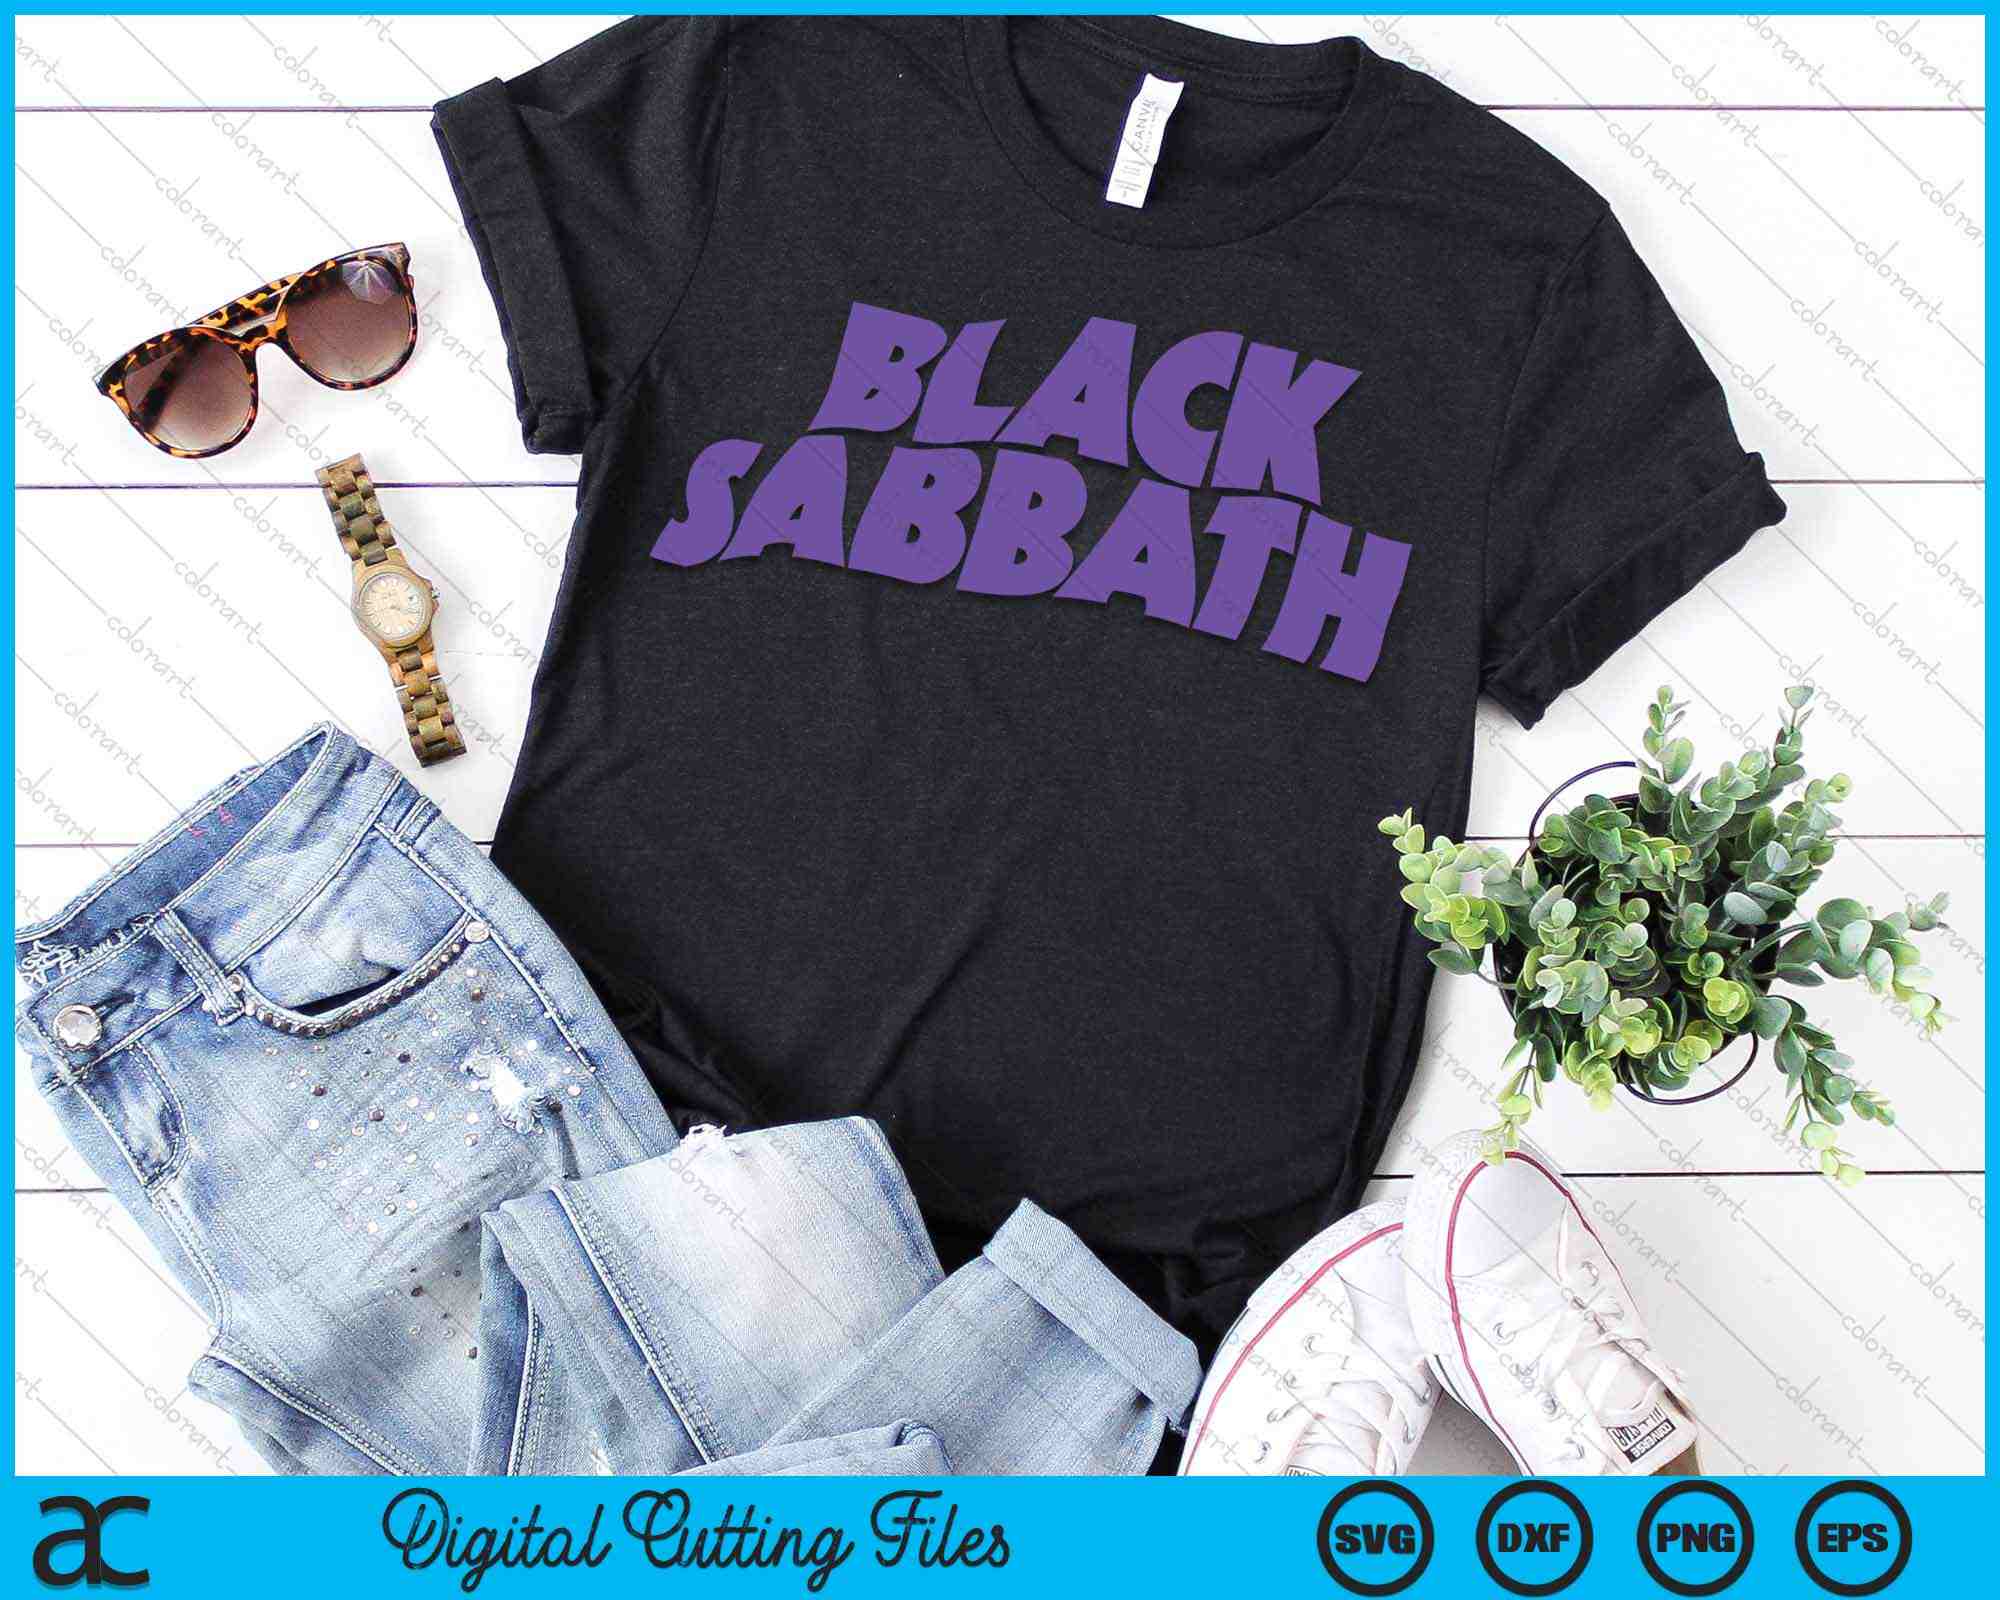 black sabbath logo png